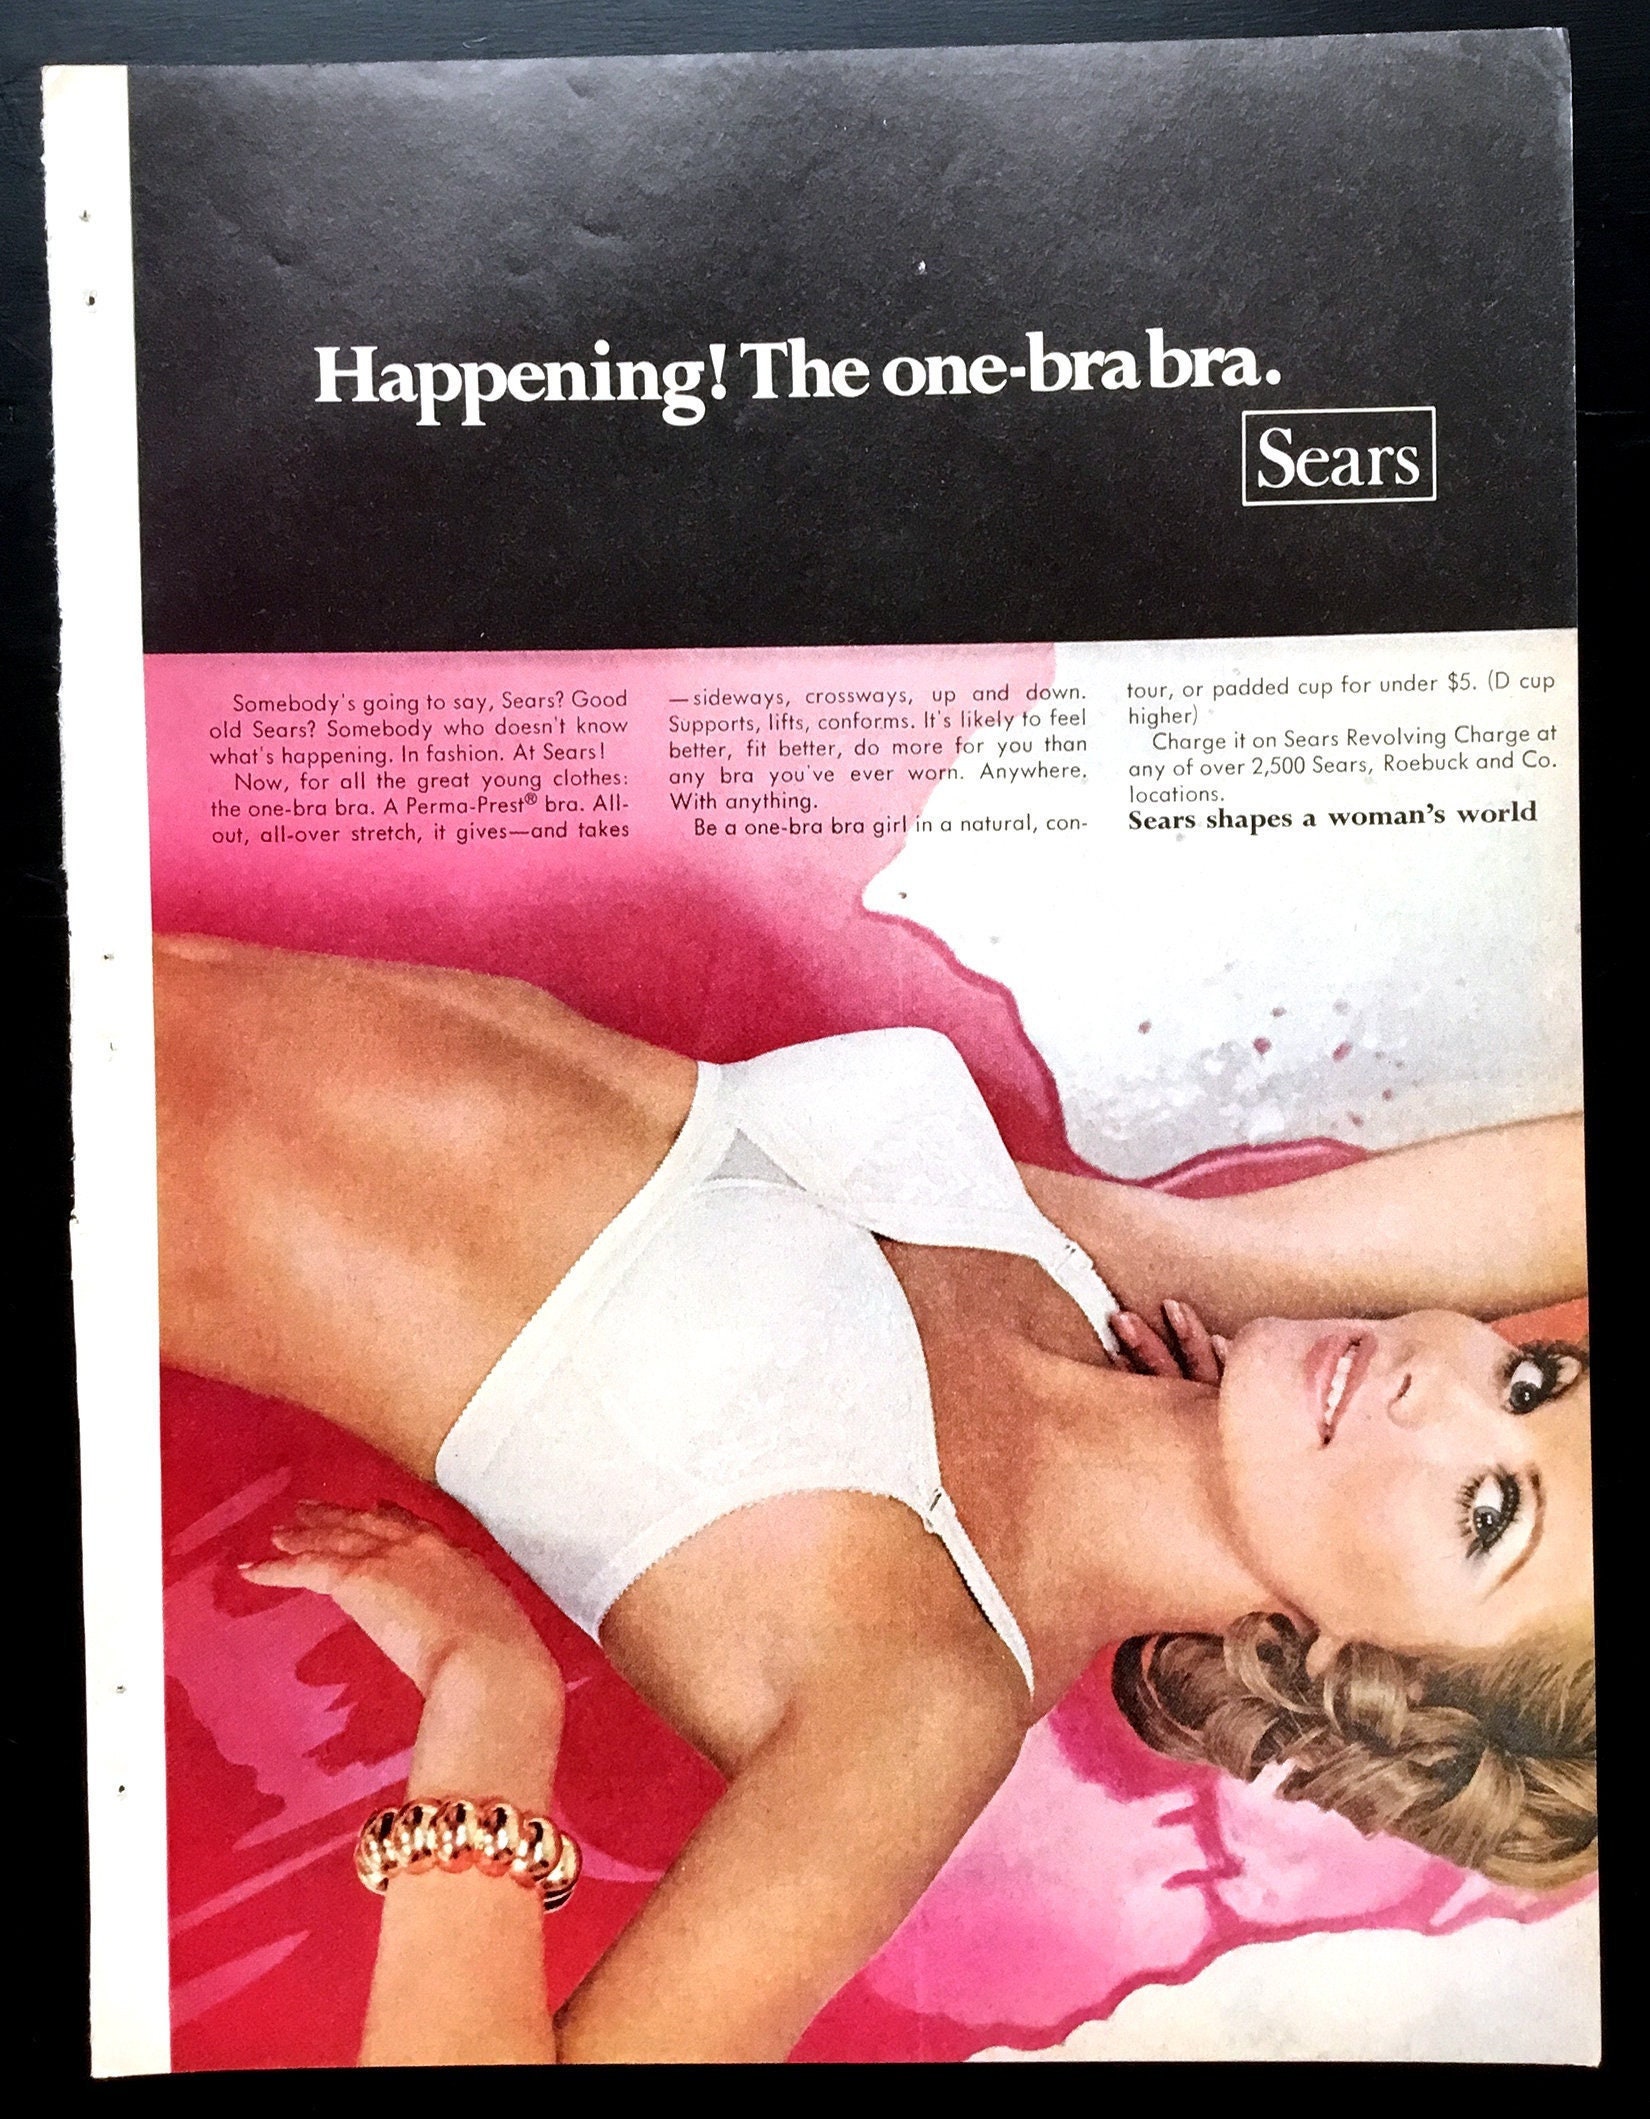 1962 Maidenform Bra Ad Vintage Ladies Lingerie Advertising